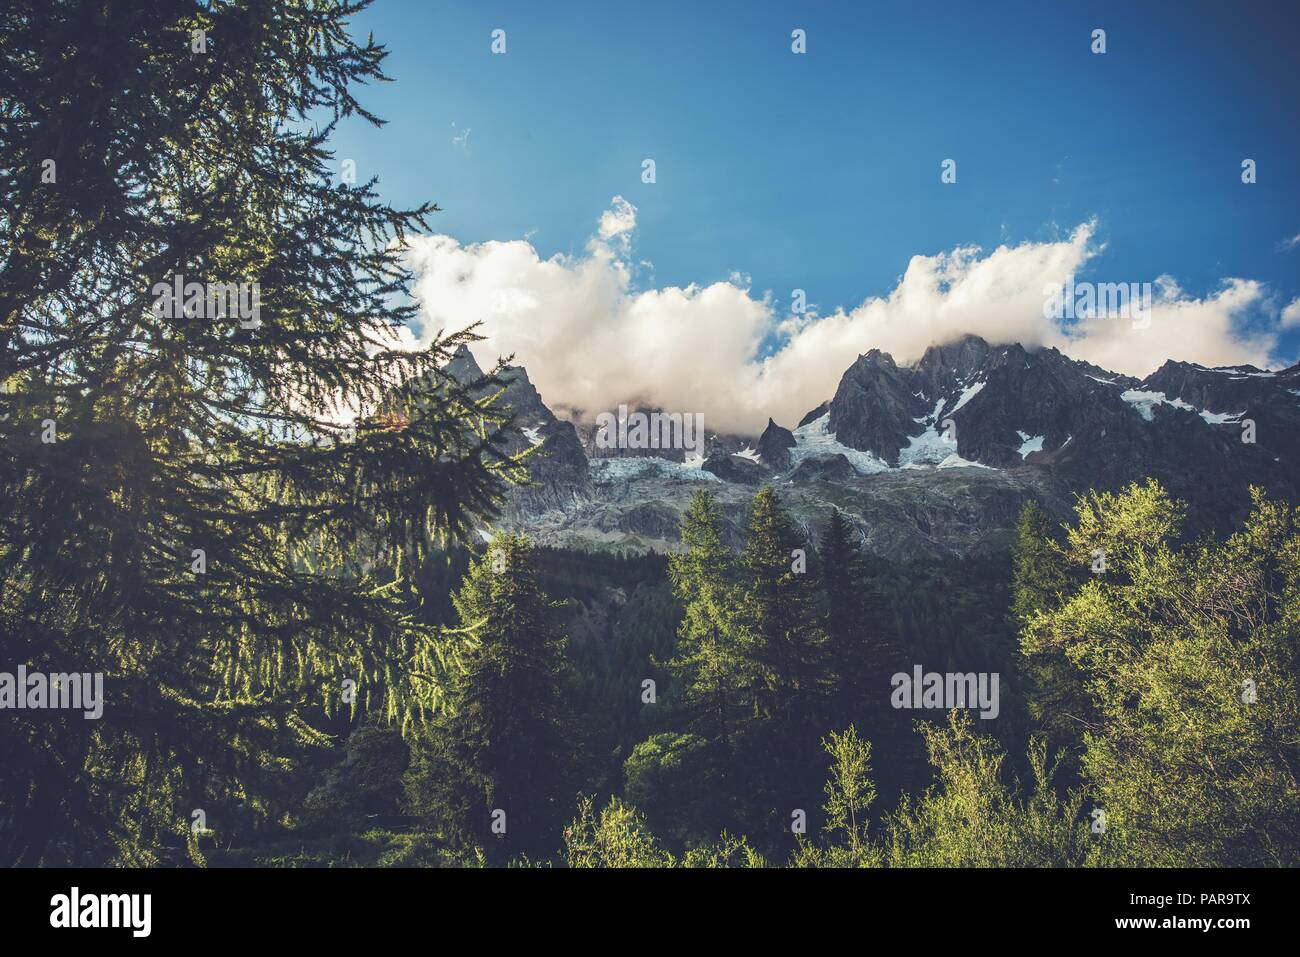 Swiss Alp Mountains Landscape. Jungfrau Region, Switzerland, Europe. Summer Alpine Scenery. Stock Photo